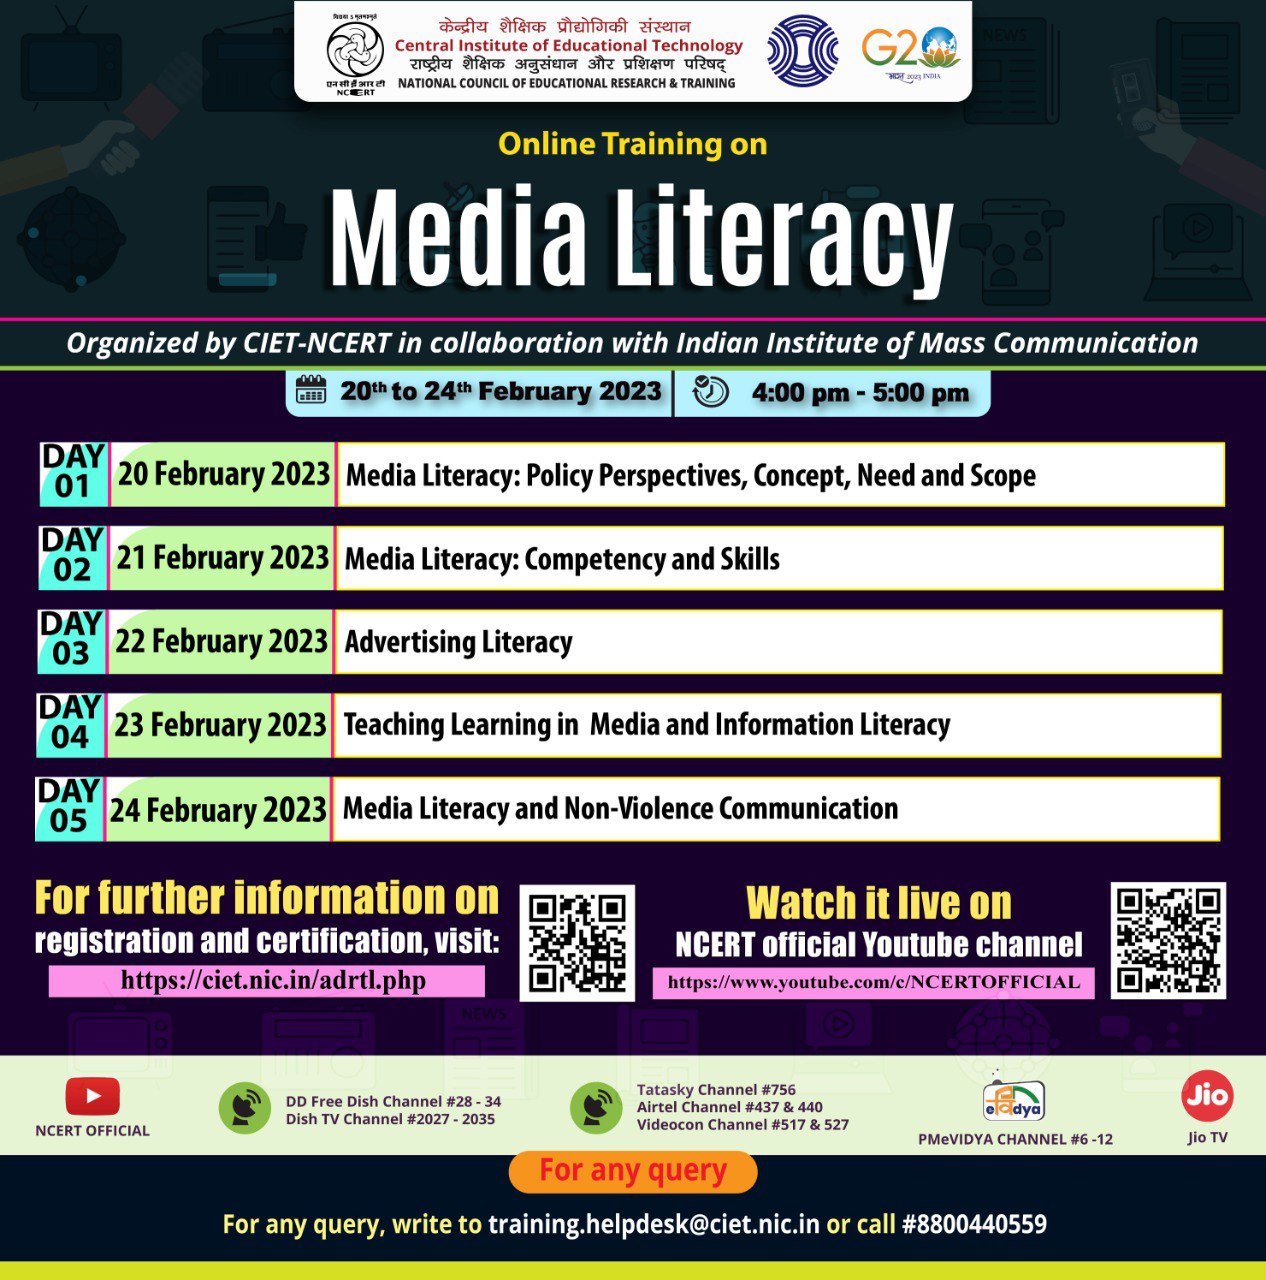 Online Training on Media Literacy Image